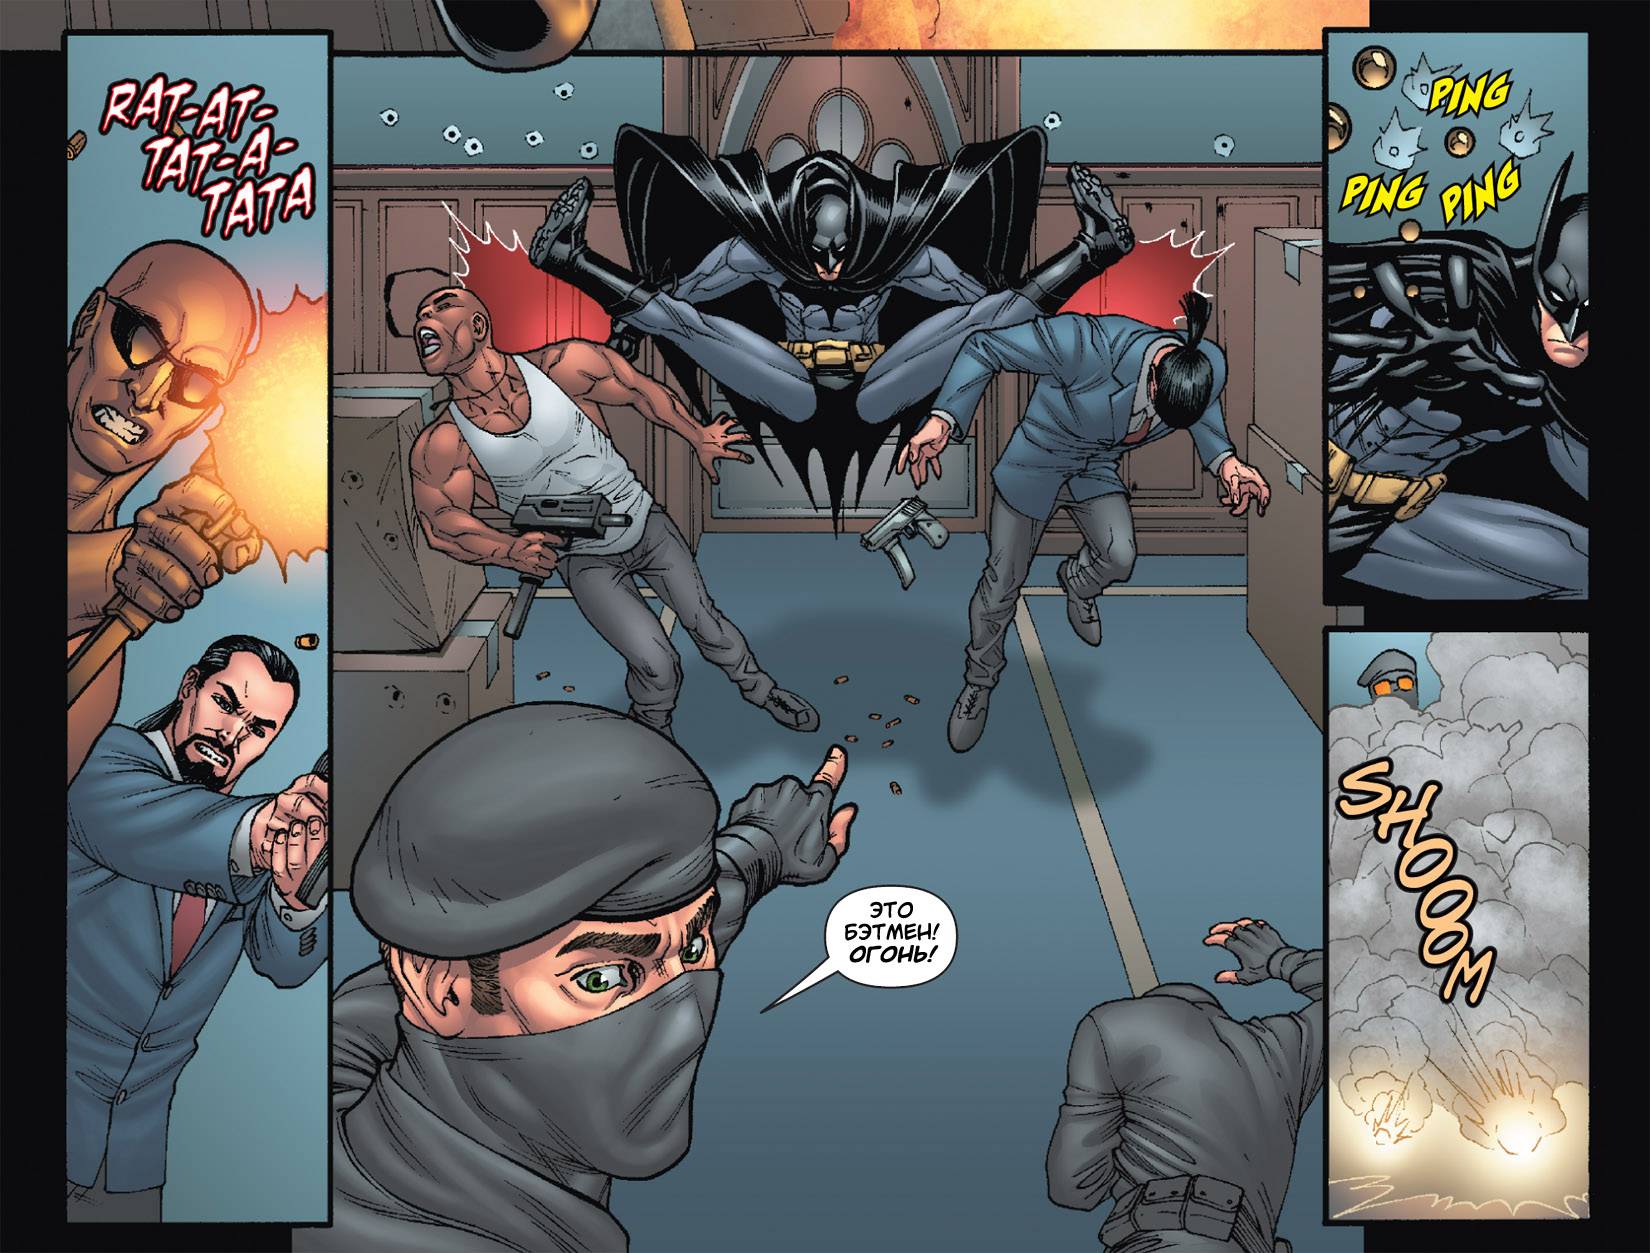 Бэтмен: Помешанный Аркхем №3 онлайн